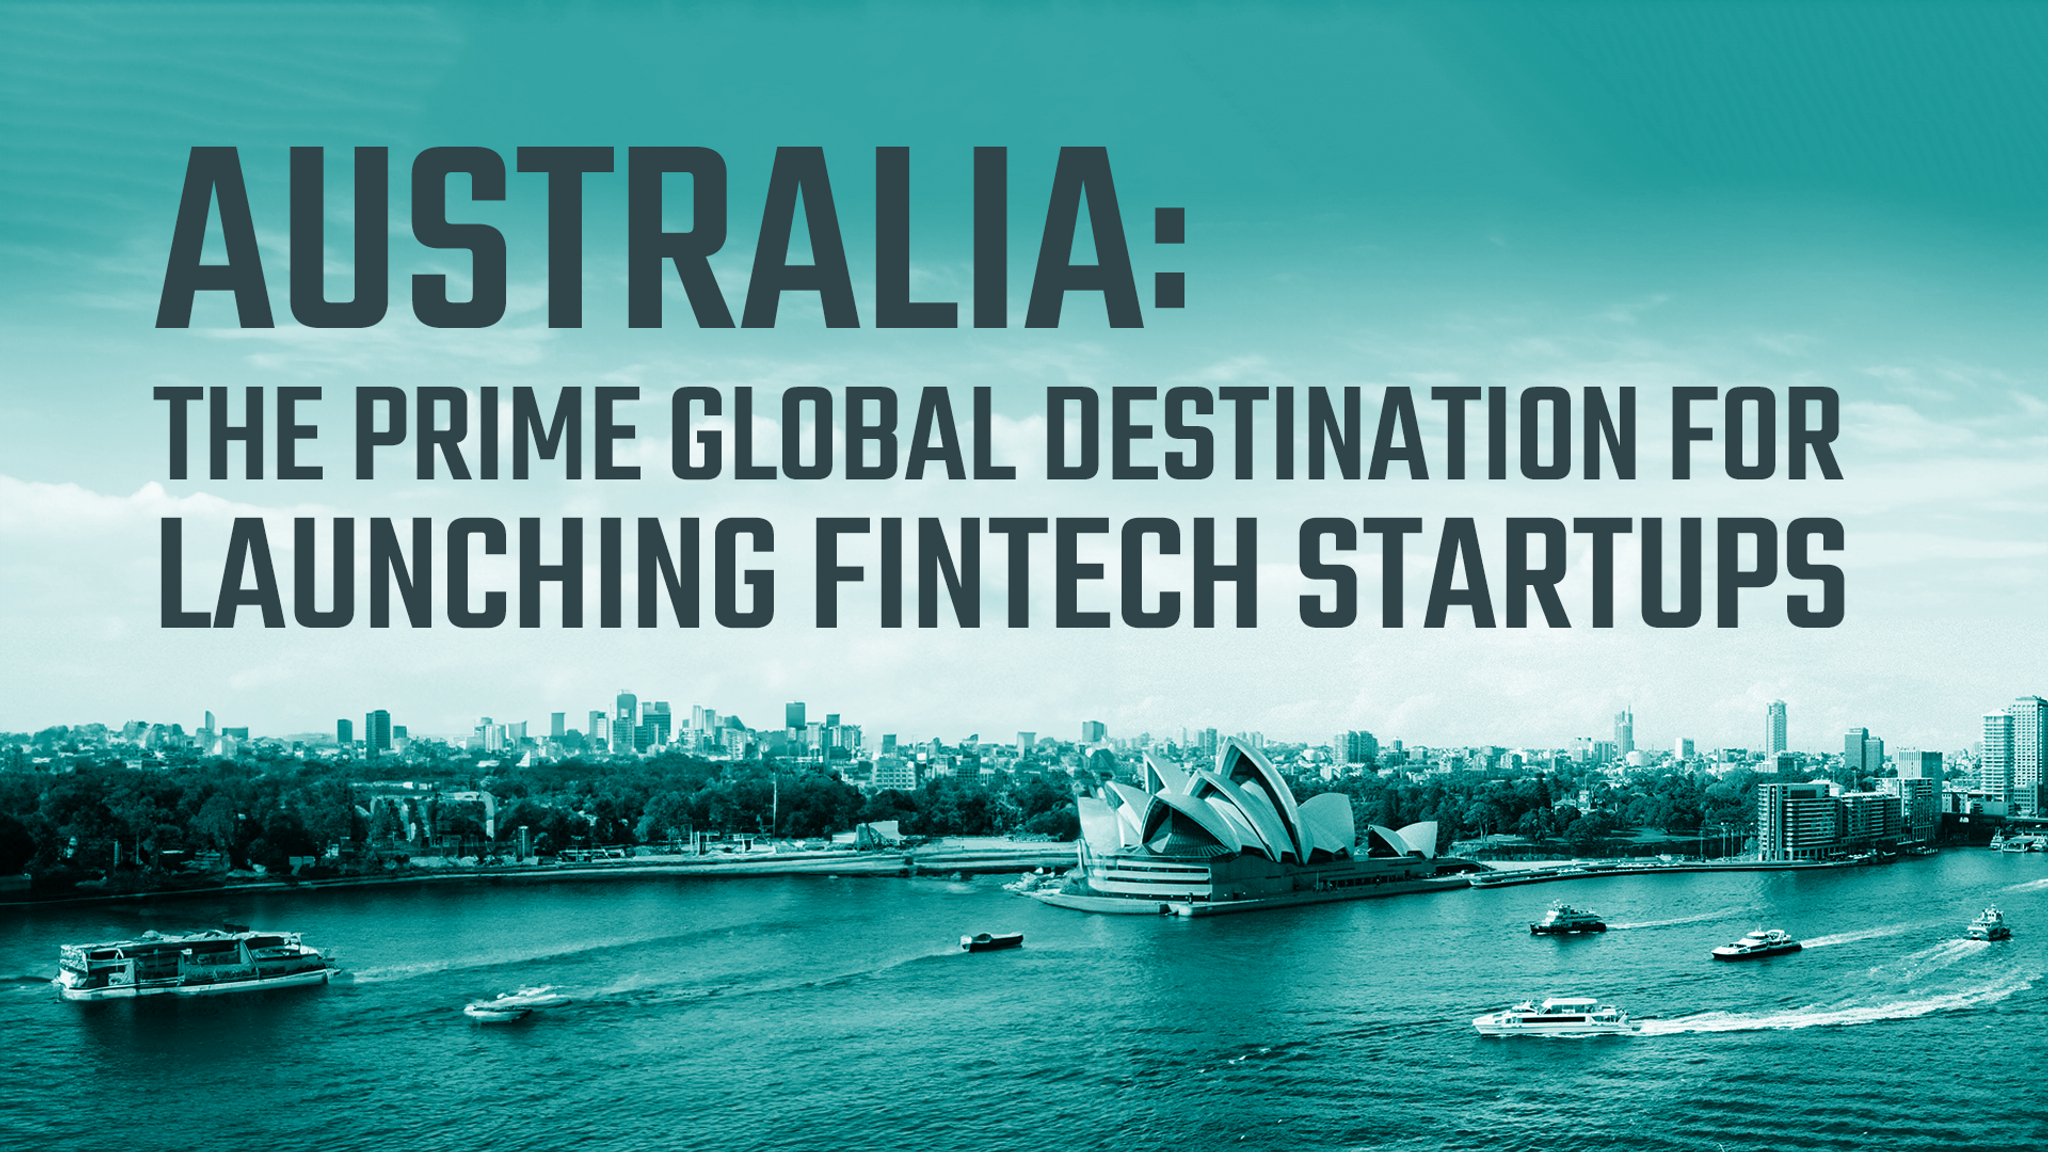 Australia, The Prime Global Destination for Launching Fintech Startups